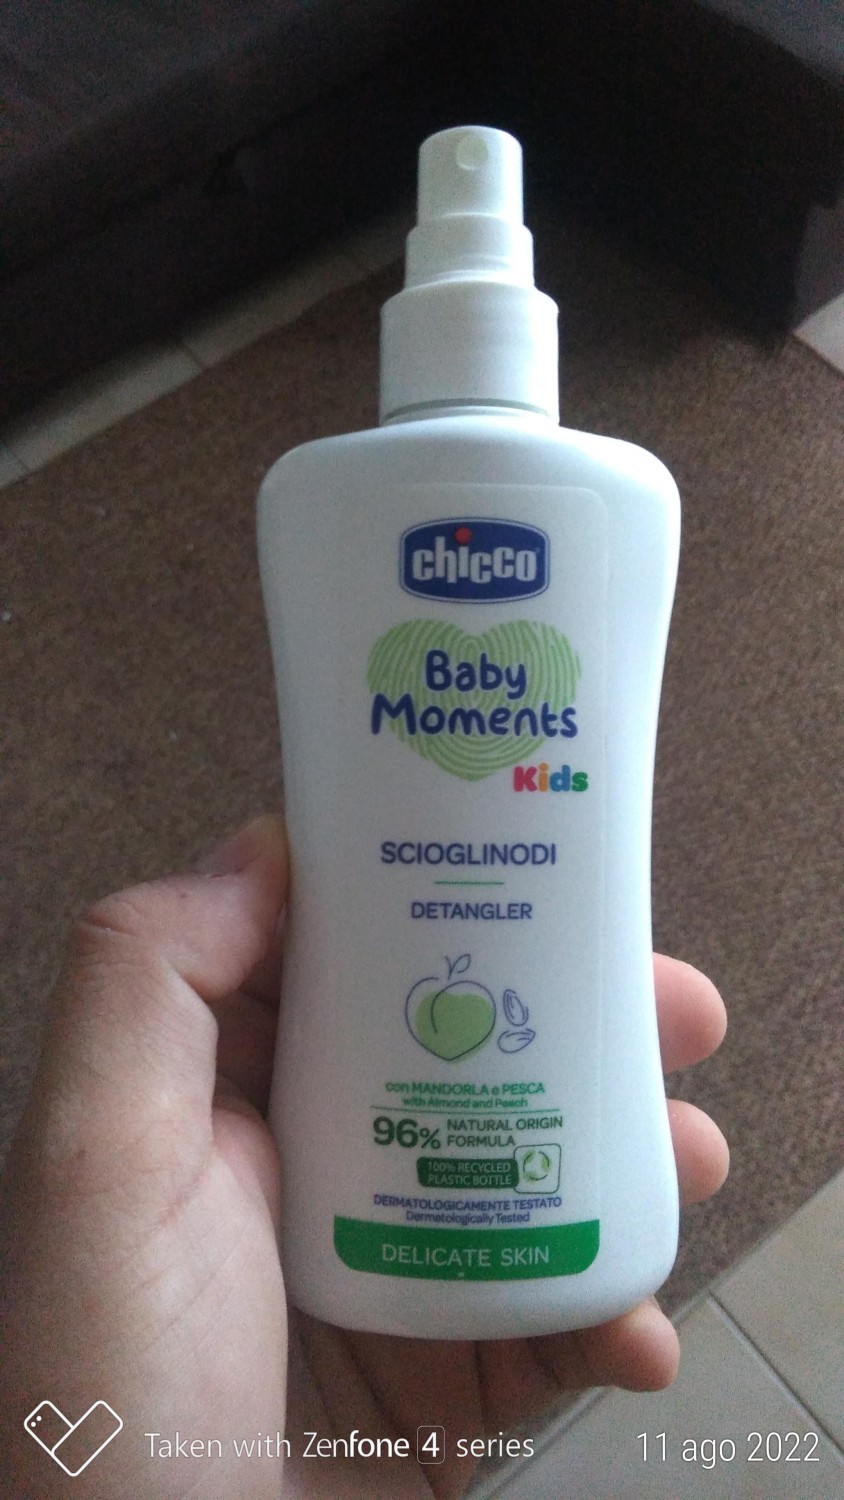 Baby moments Kids - Test mammachetest